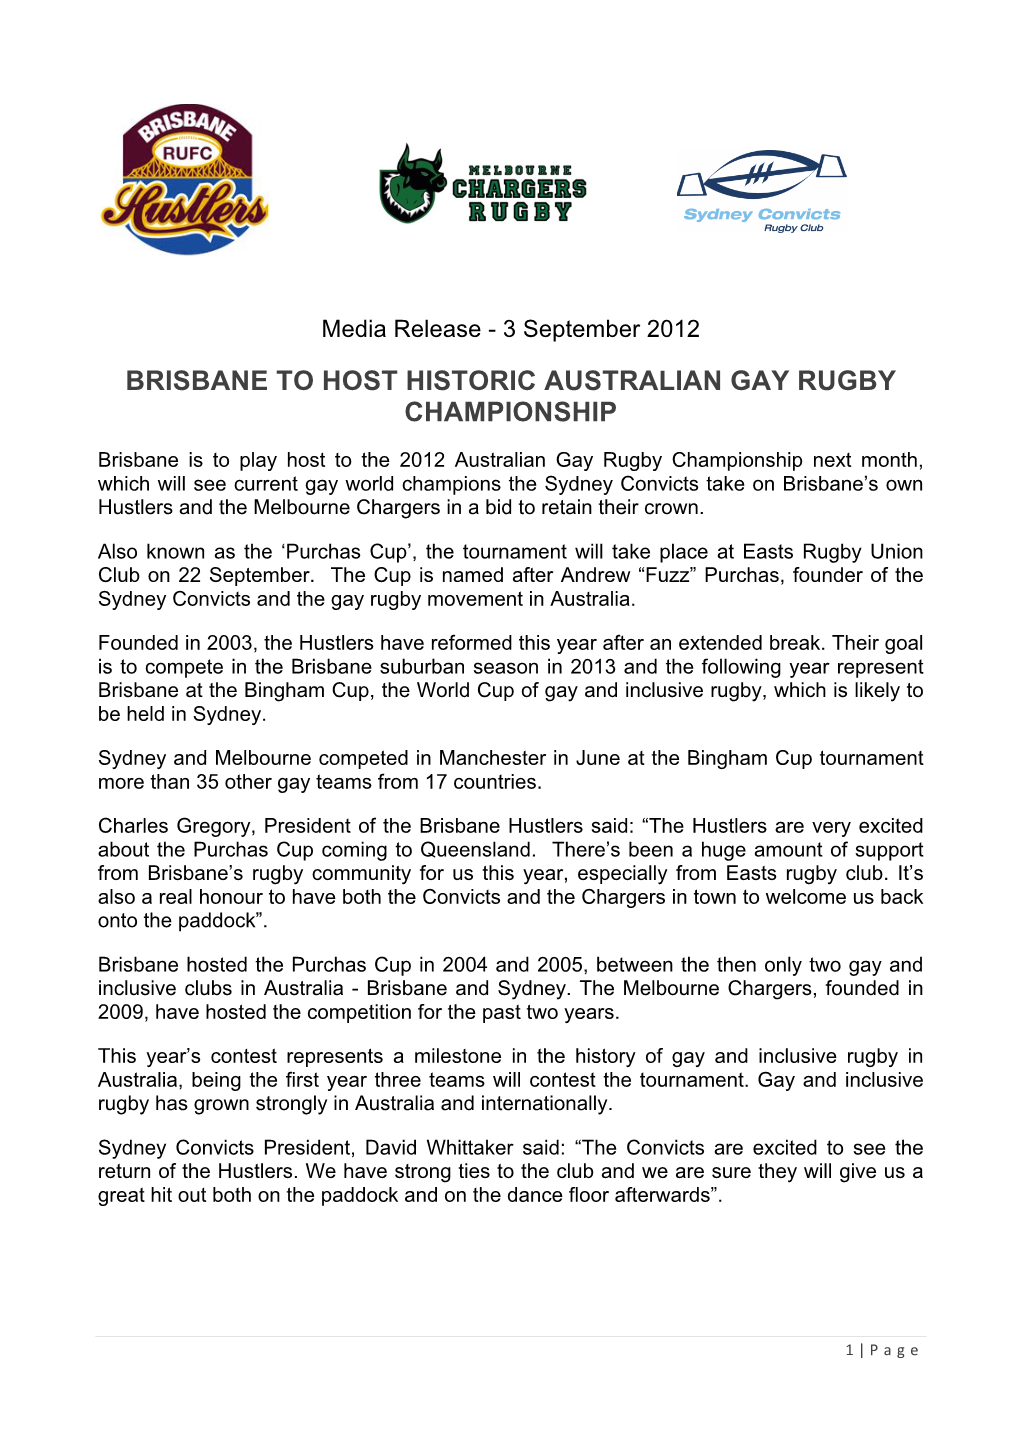 Brisbane to Host Historic Australian Gay Rugby Championship